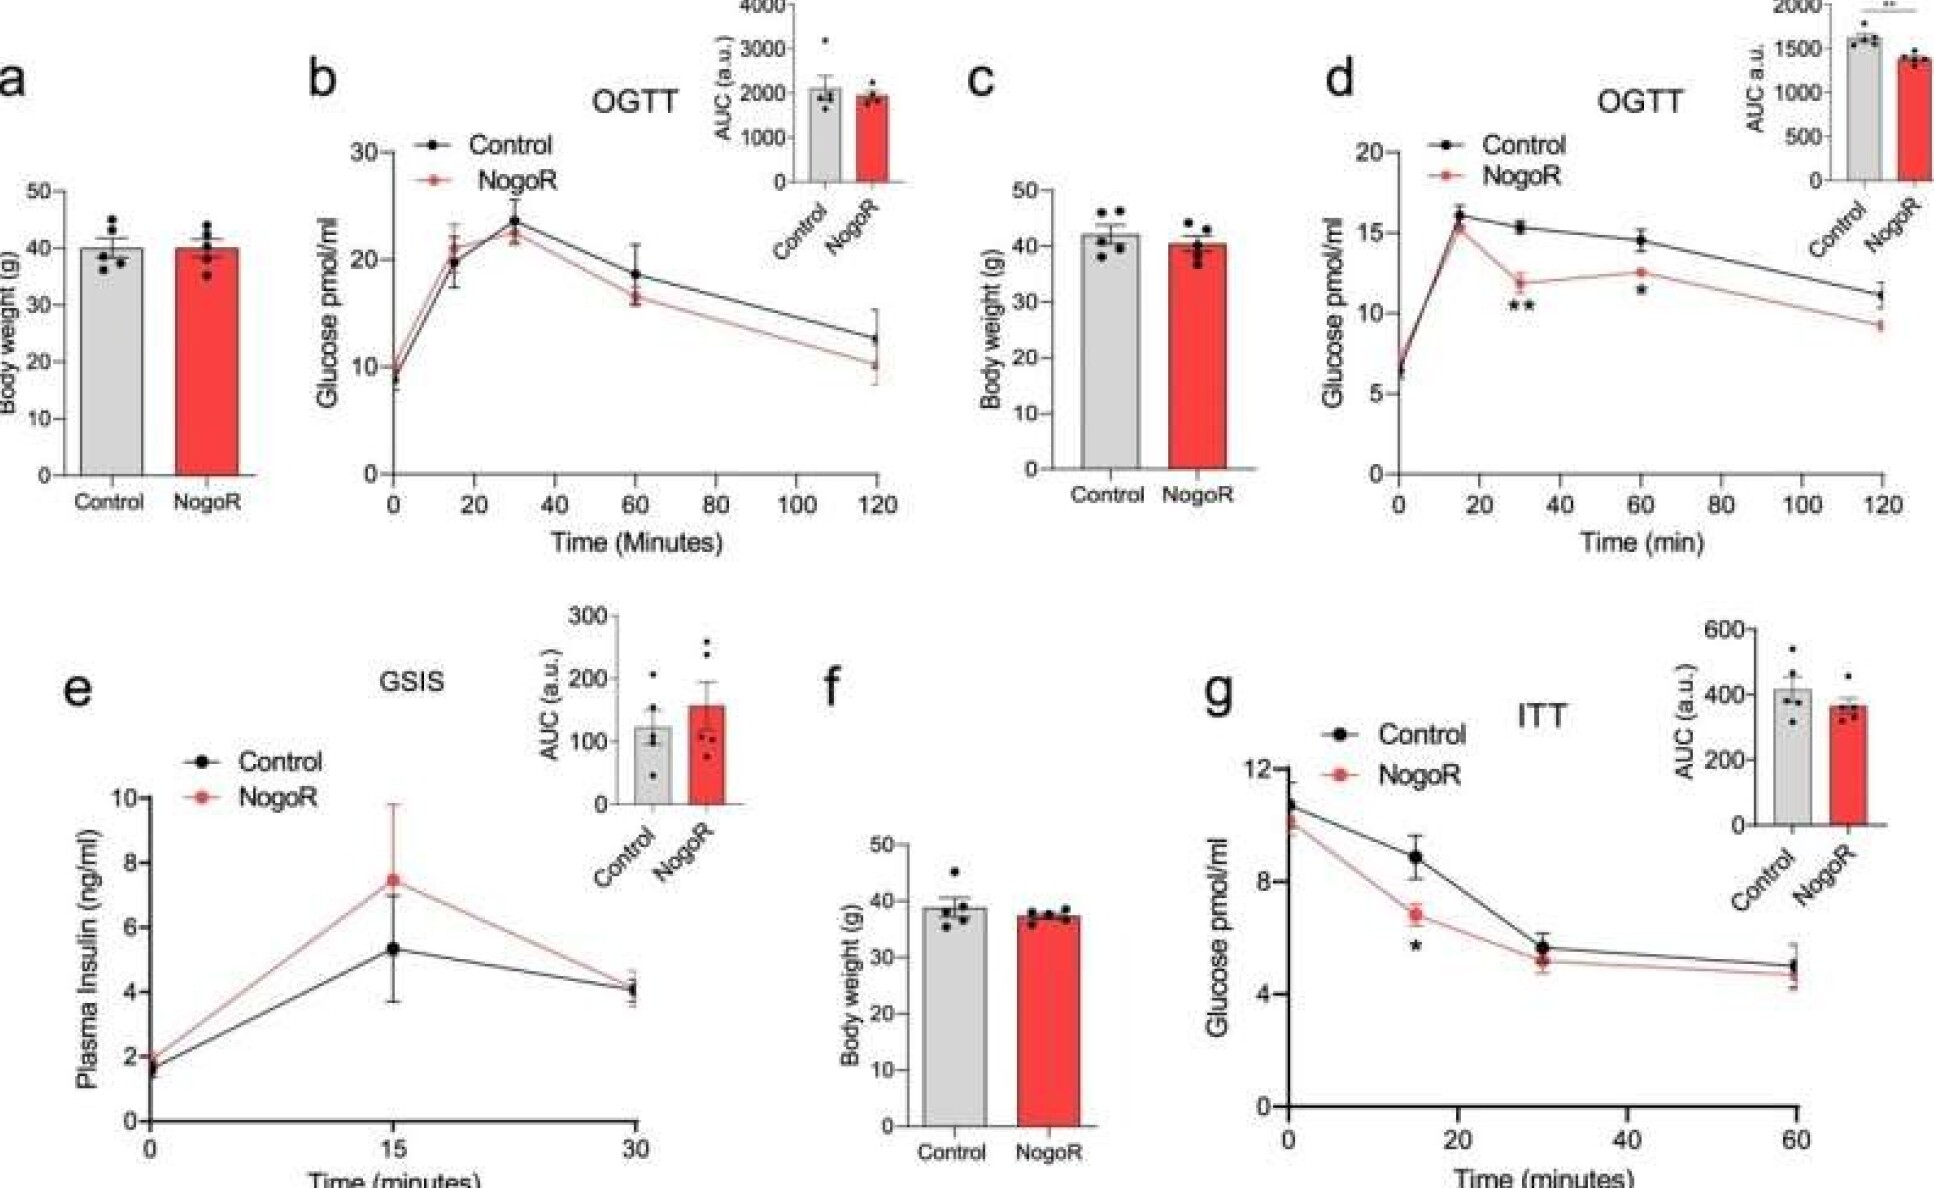  NogoR enhances glucose clearance and insulin sensitivity in HFD mice.